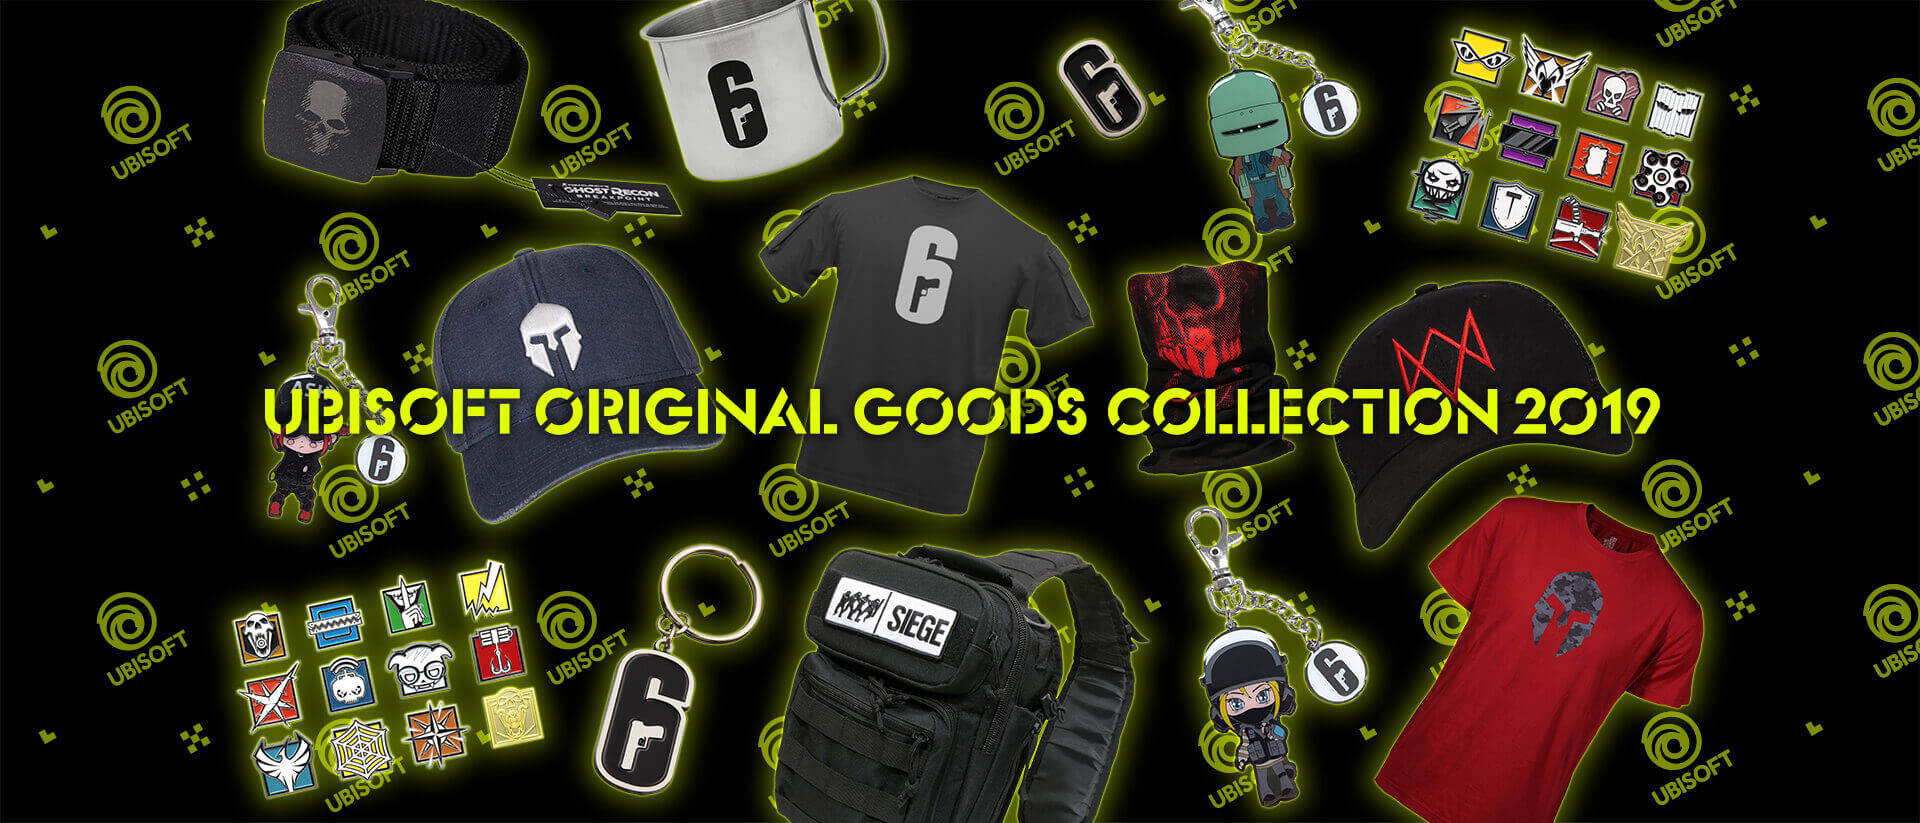 Ubisoft original goods collection 2019